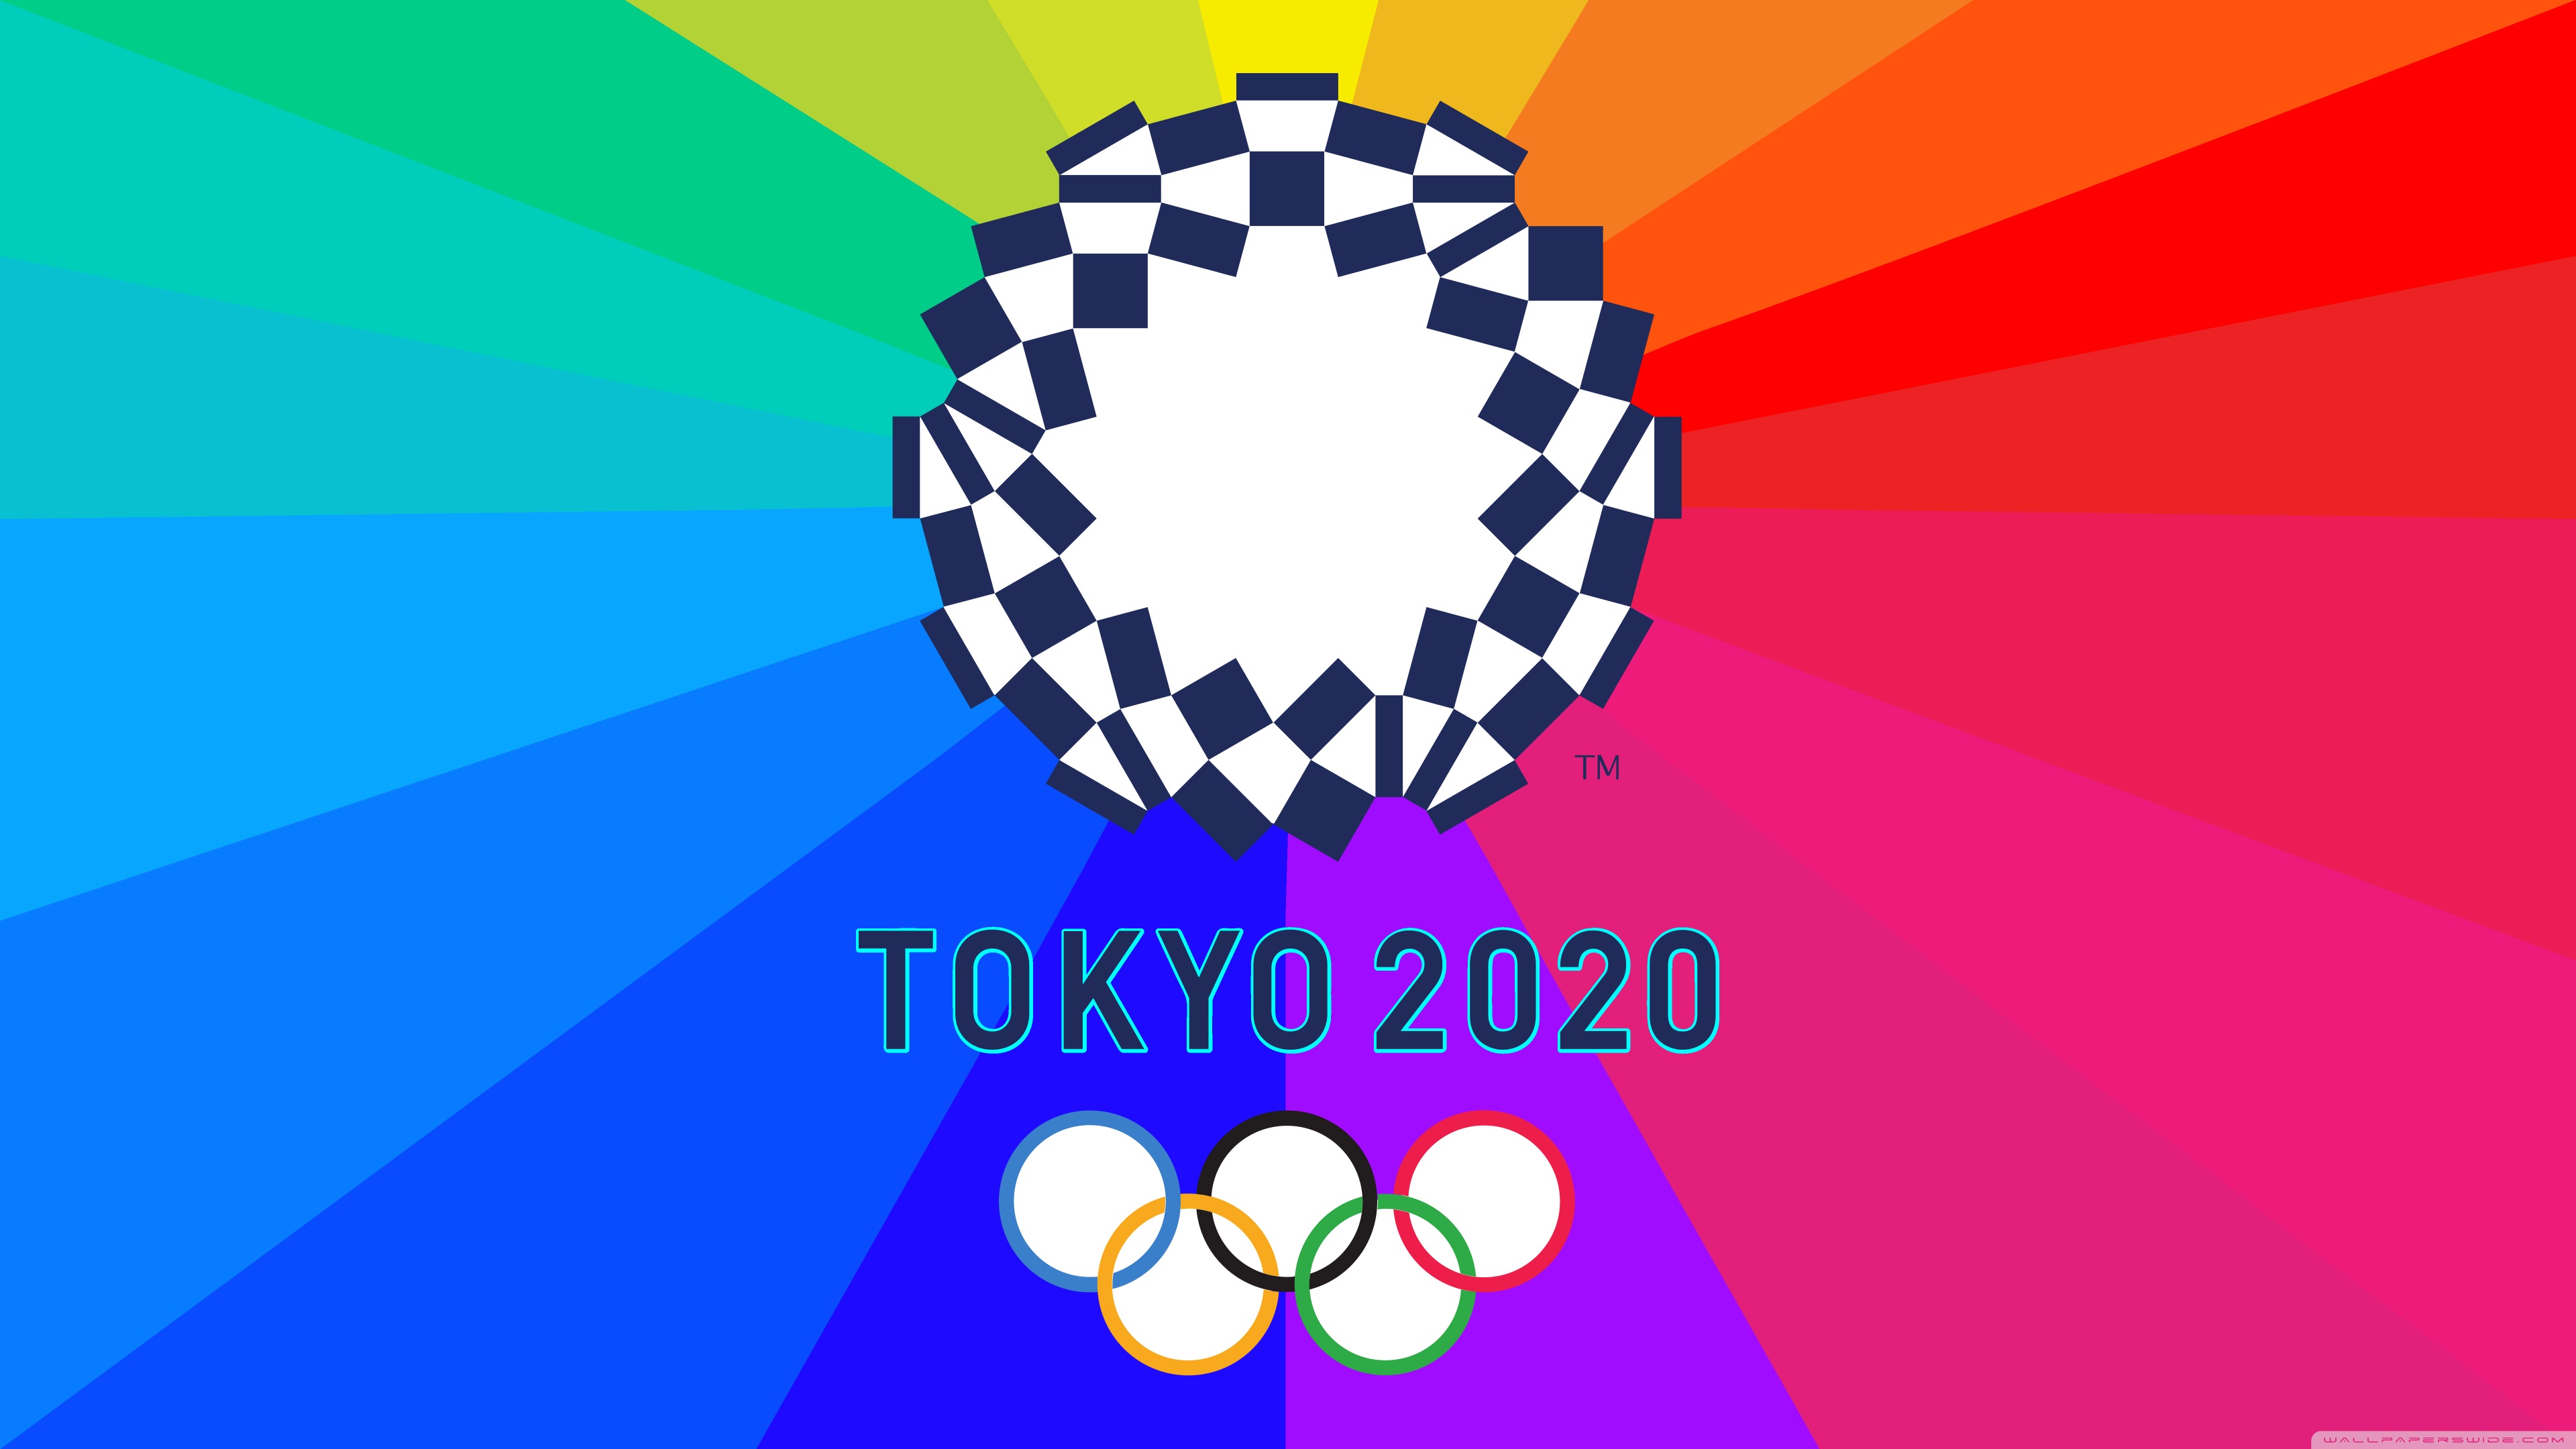 MASEY - Tokyo 2020 “Team Australia” wallpaper series //